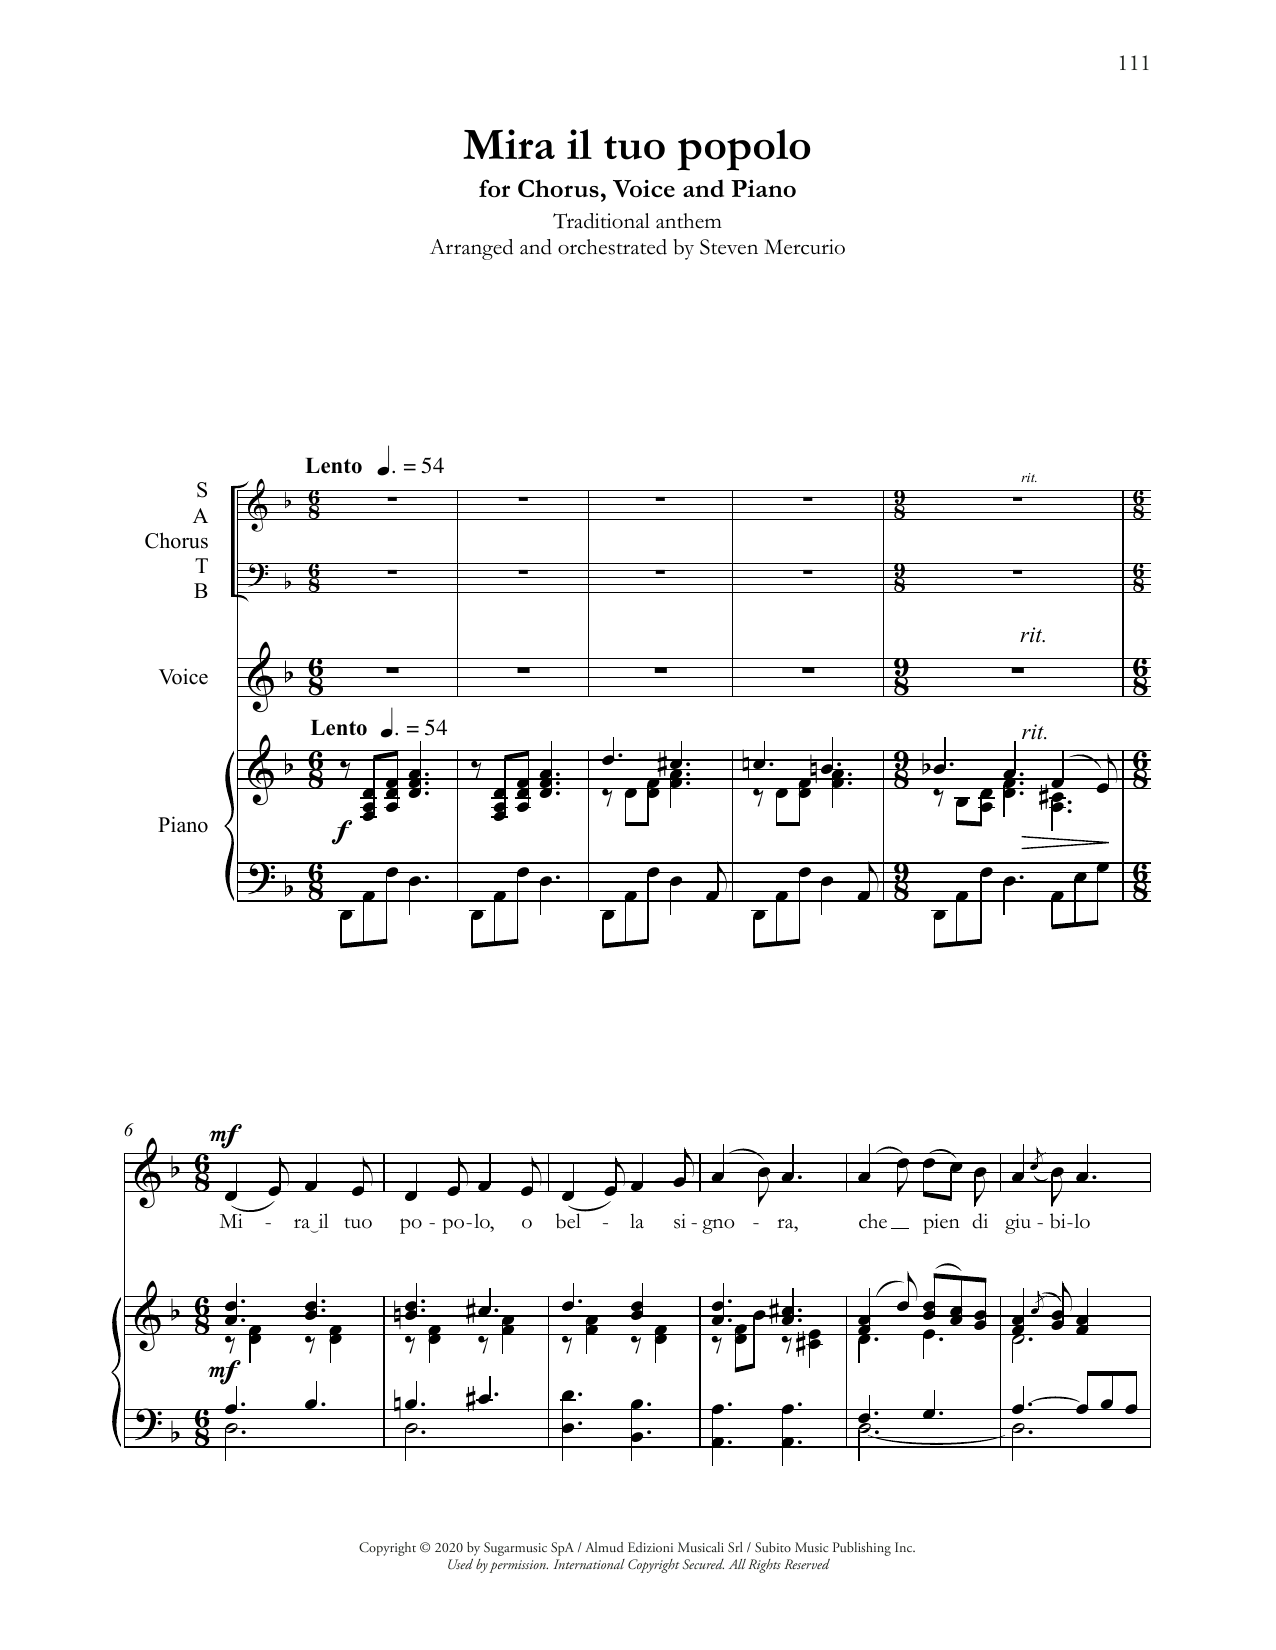 Andrea Bocelli Mira il tuo popolo (arr. Steven Mercurio) Sheet Music Notes & Chords for SATB Choir - Download or Print PDF